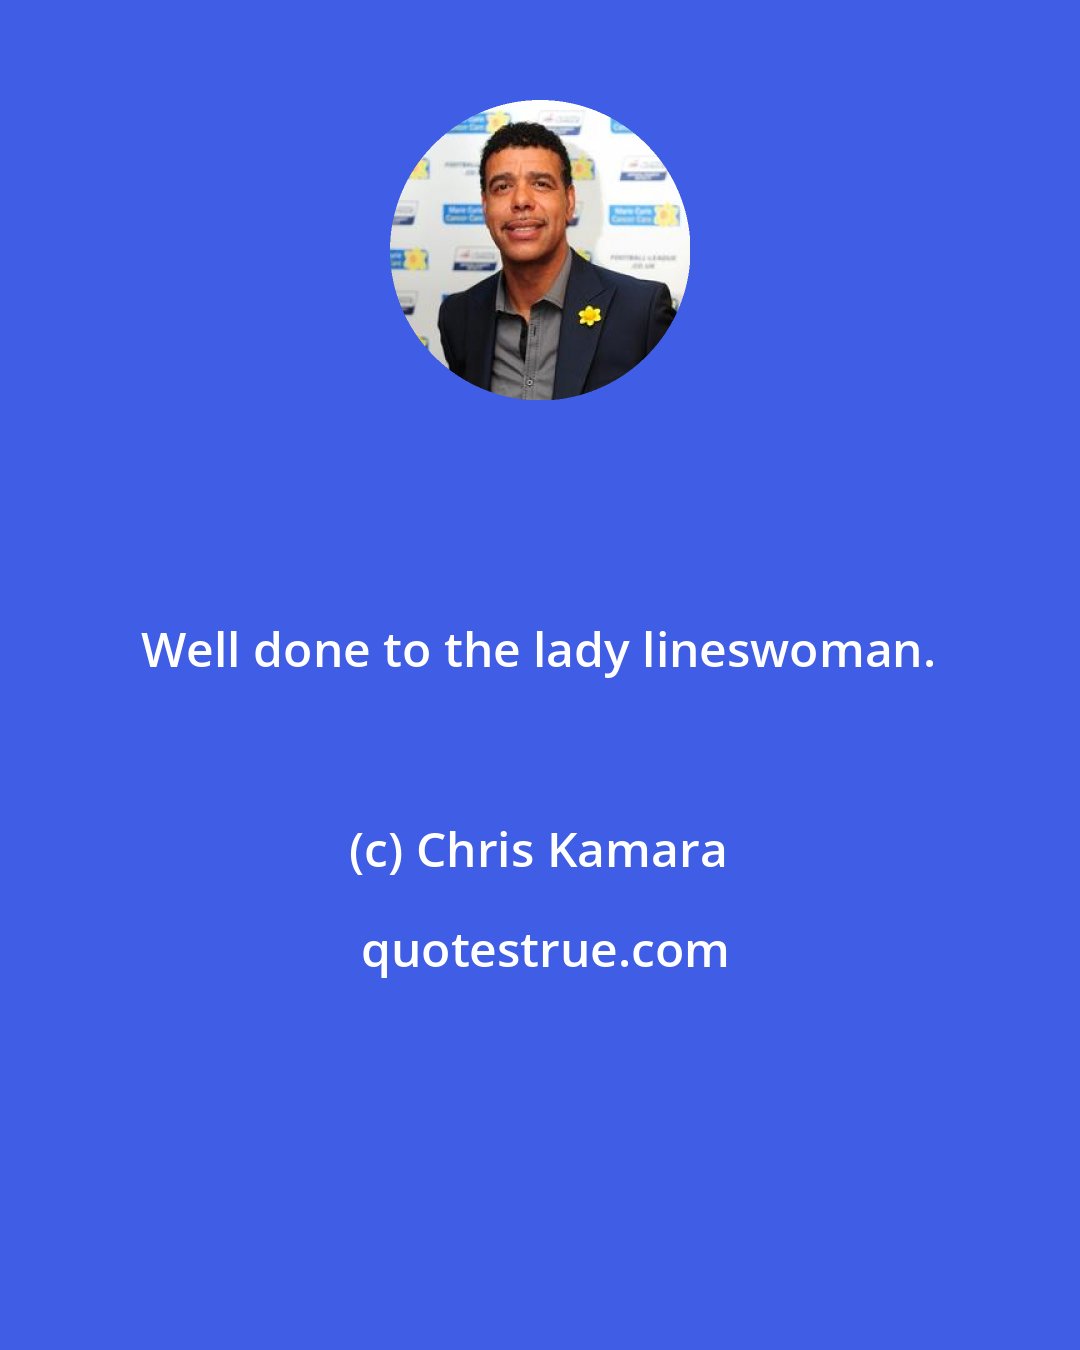 Chris Kamara: Well done to the lady lineswoman.